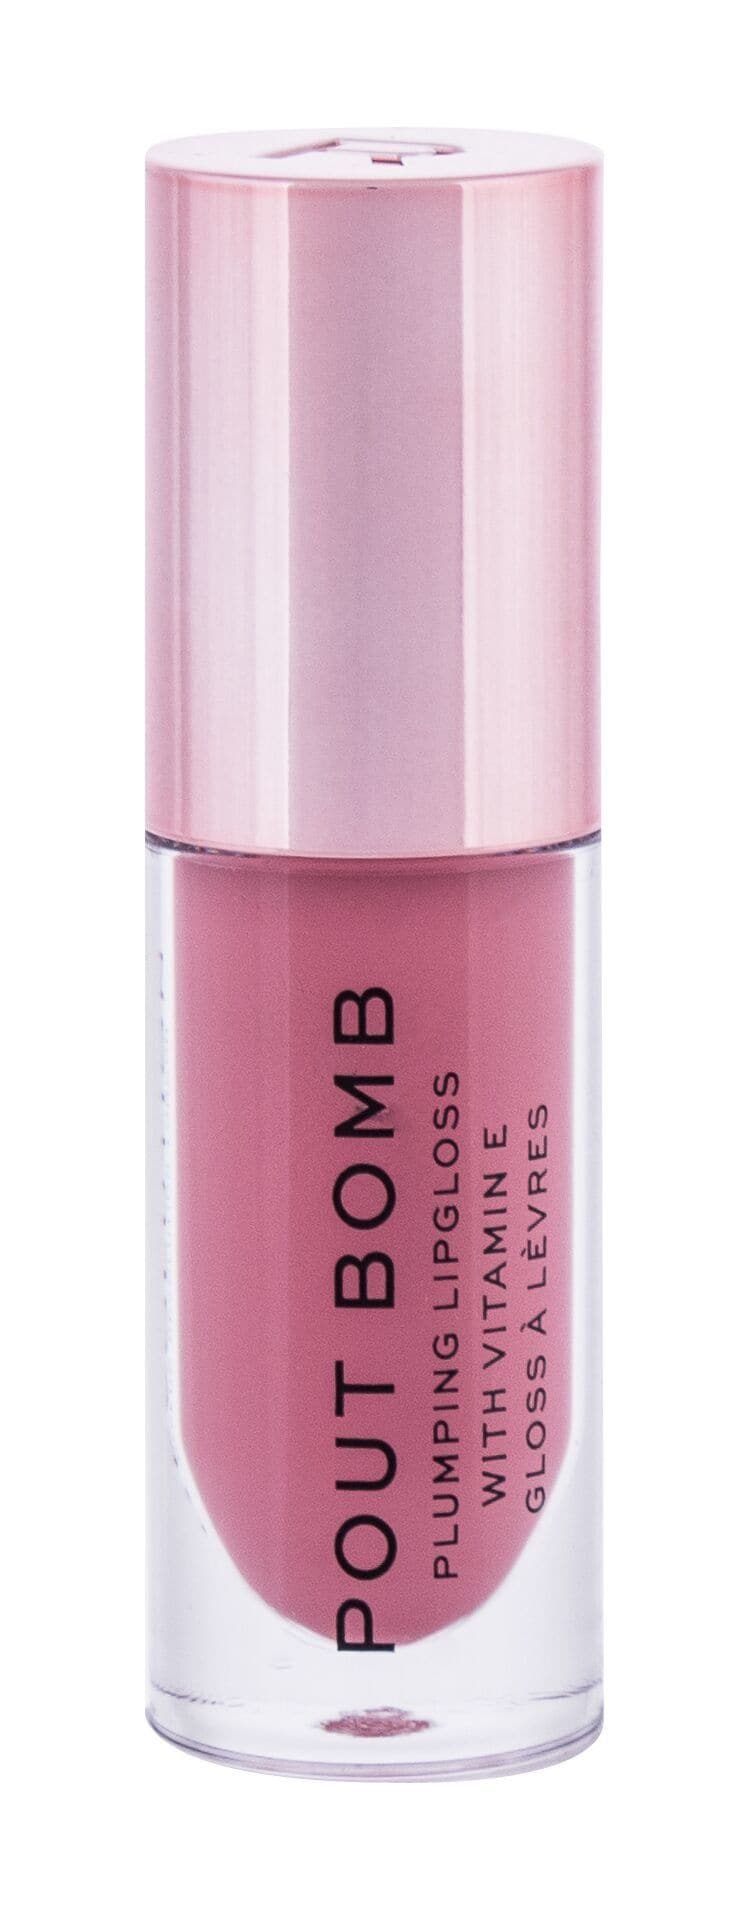 Revolution Pout Bomb - Premium Lip Gloss from Makeup Revolution - Just Rs 2640! Shop now at Cozmetica